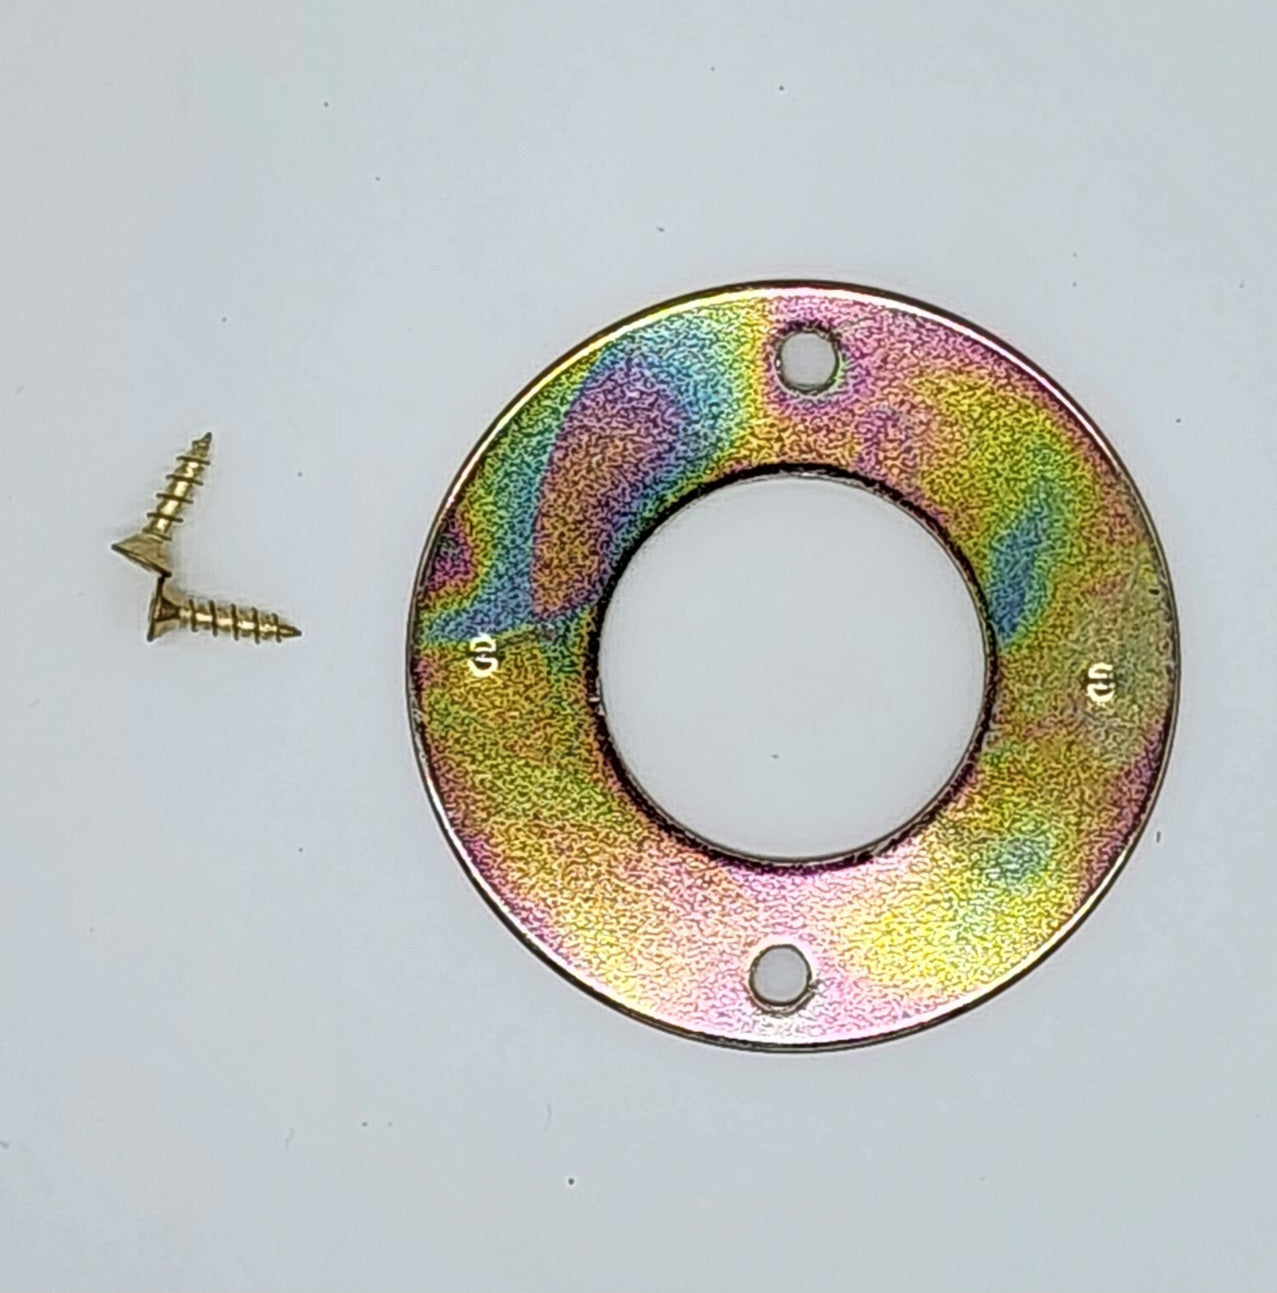 Brass ring with screws